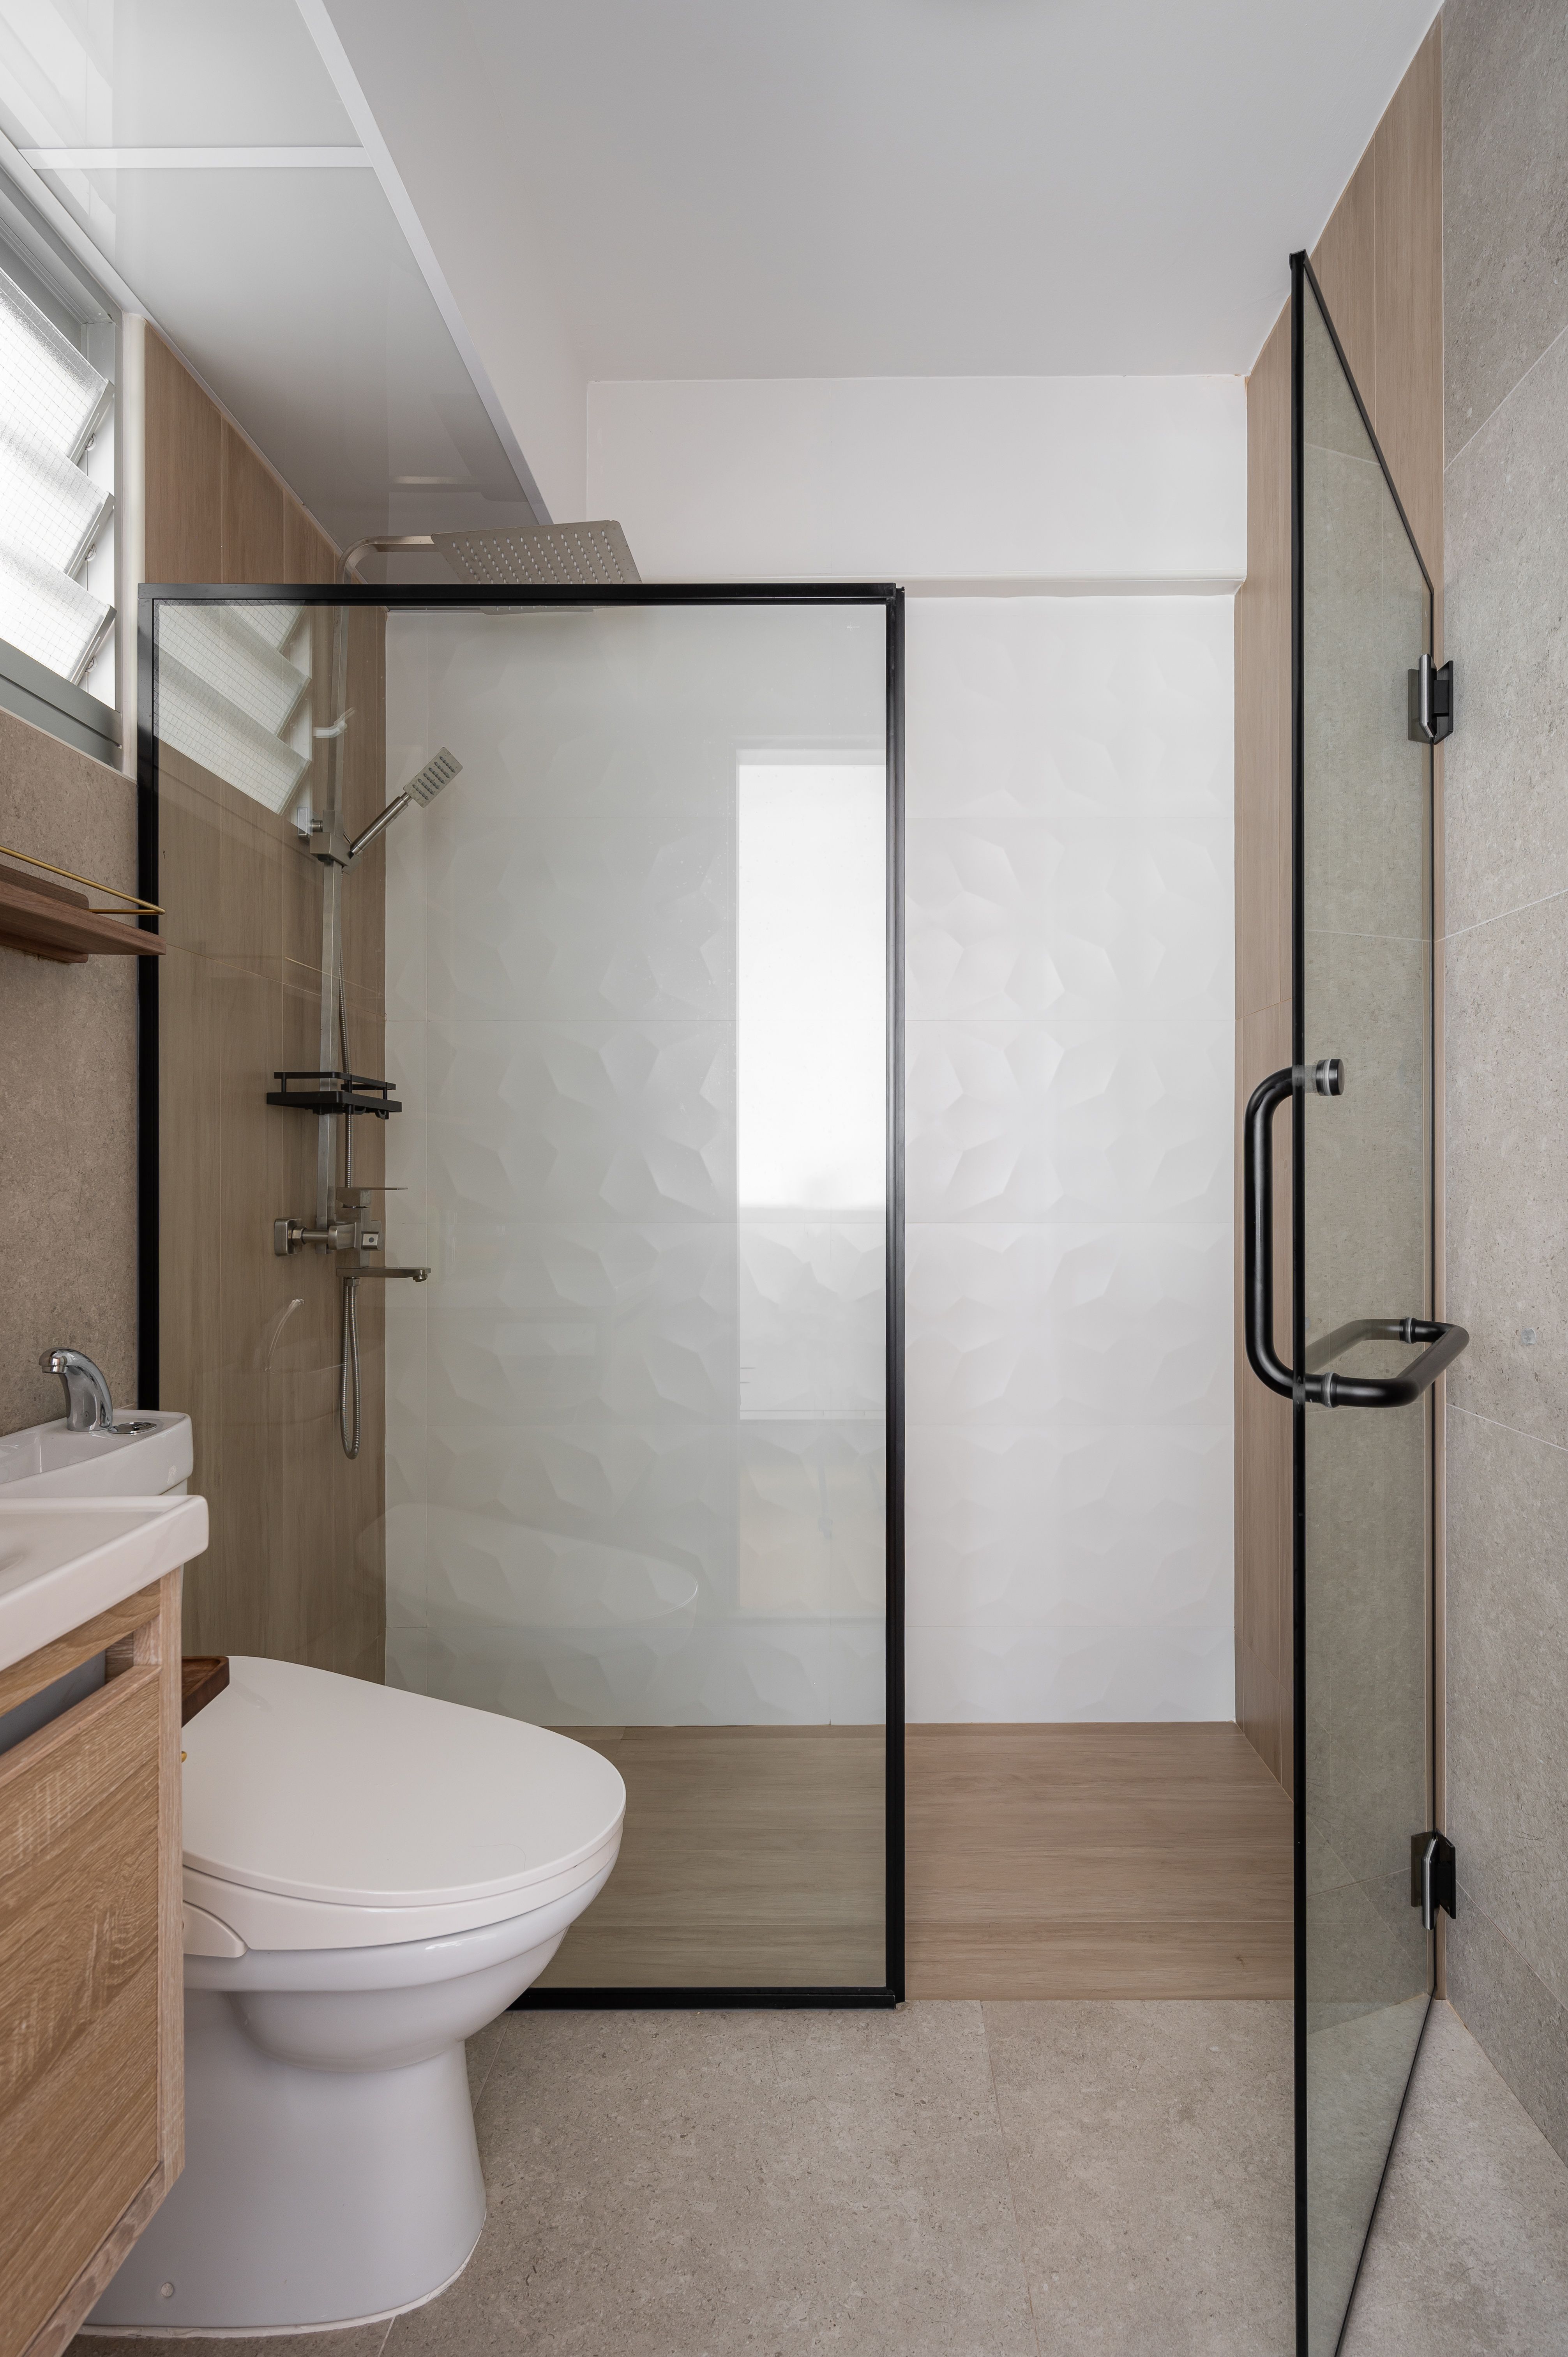 Japandi-style bathroom with a focus on minimalist design elements